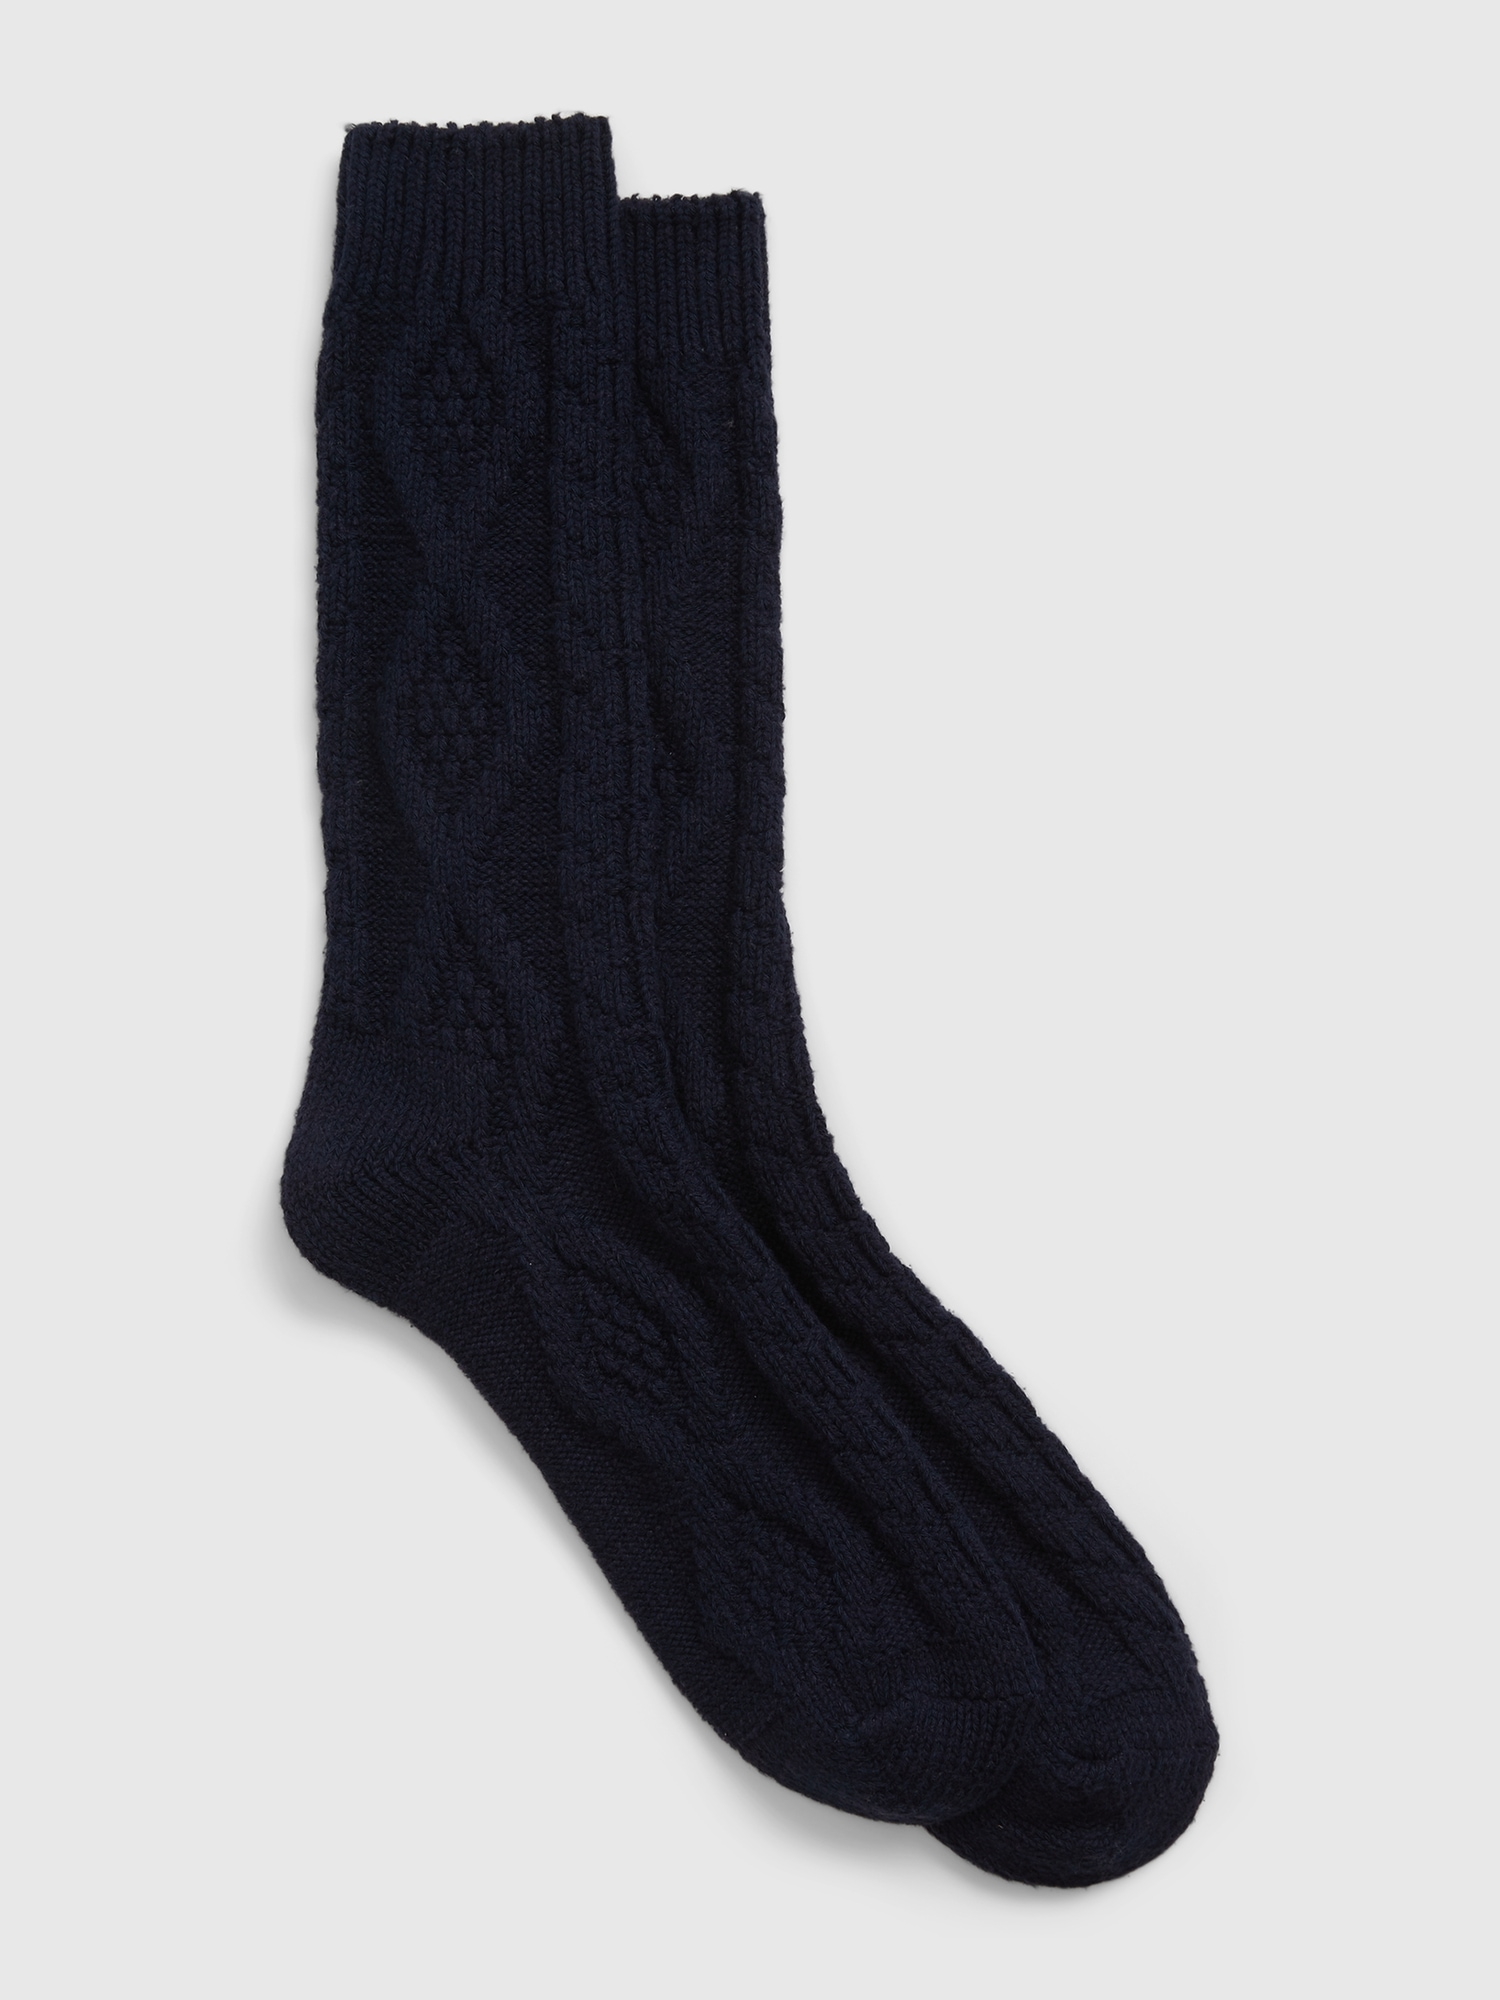 Sweater Crew Socks | Gap